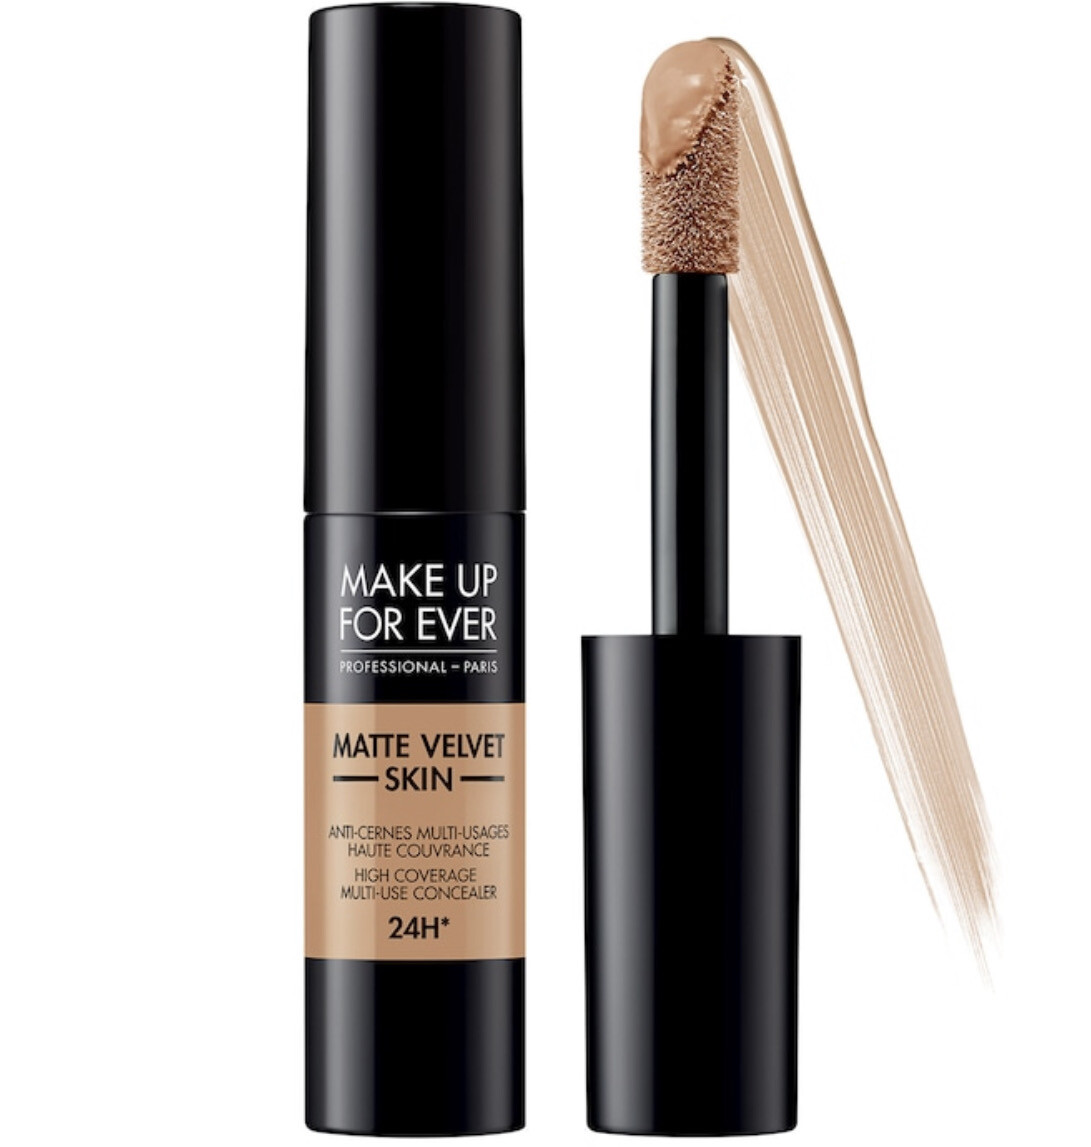 Make Up For Ever - Matte Velvet Skin High Coverage Multi-Use Concealer | 2.4 Soft Sand - for light skin with yellow undertones